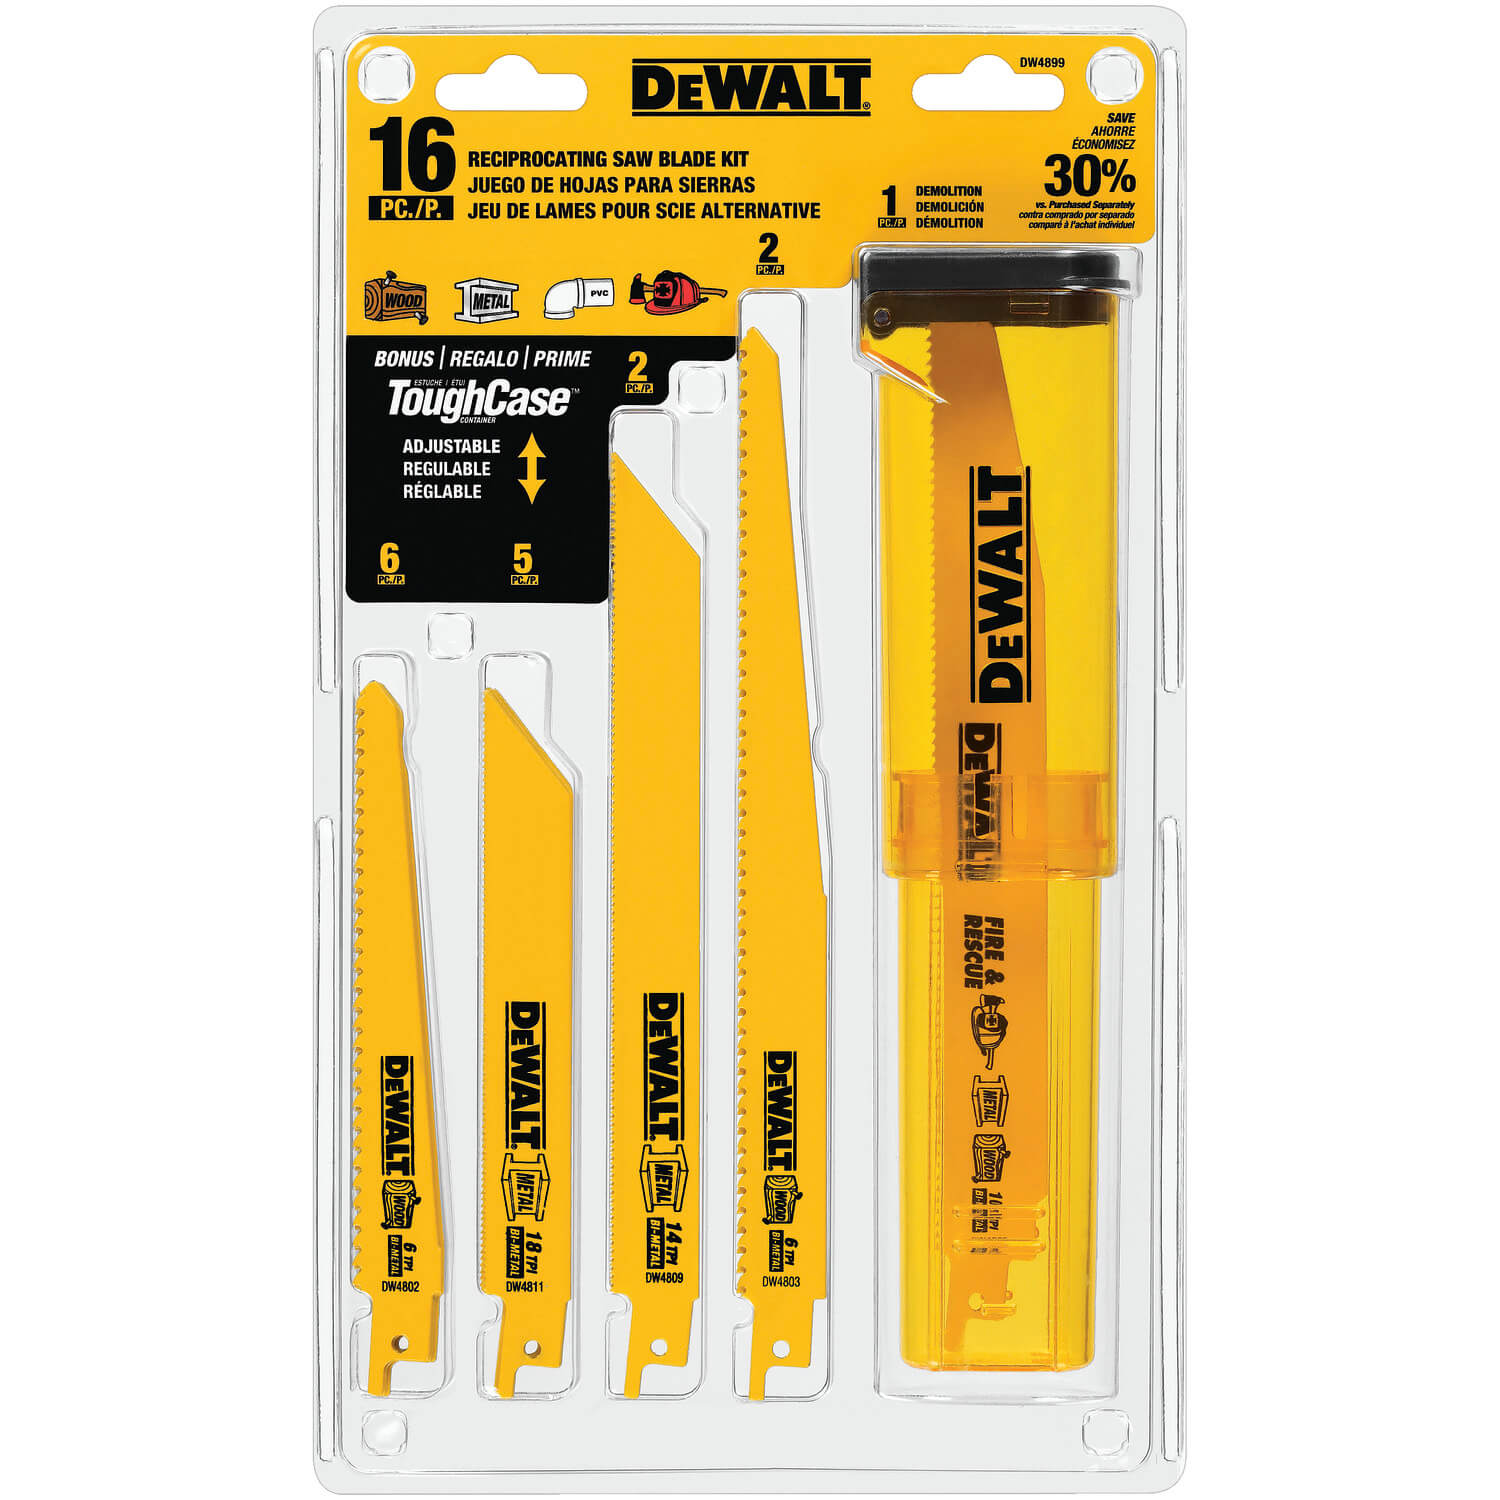 DEWALT DW4899 Bi-Metal Reciprocating Saw Blade Set, 16-Piece - wise-line-tools